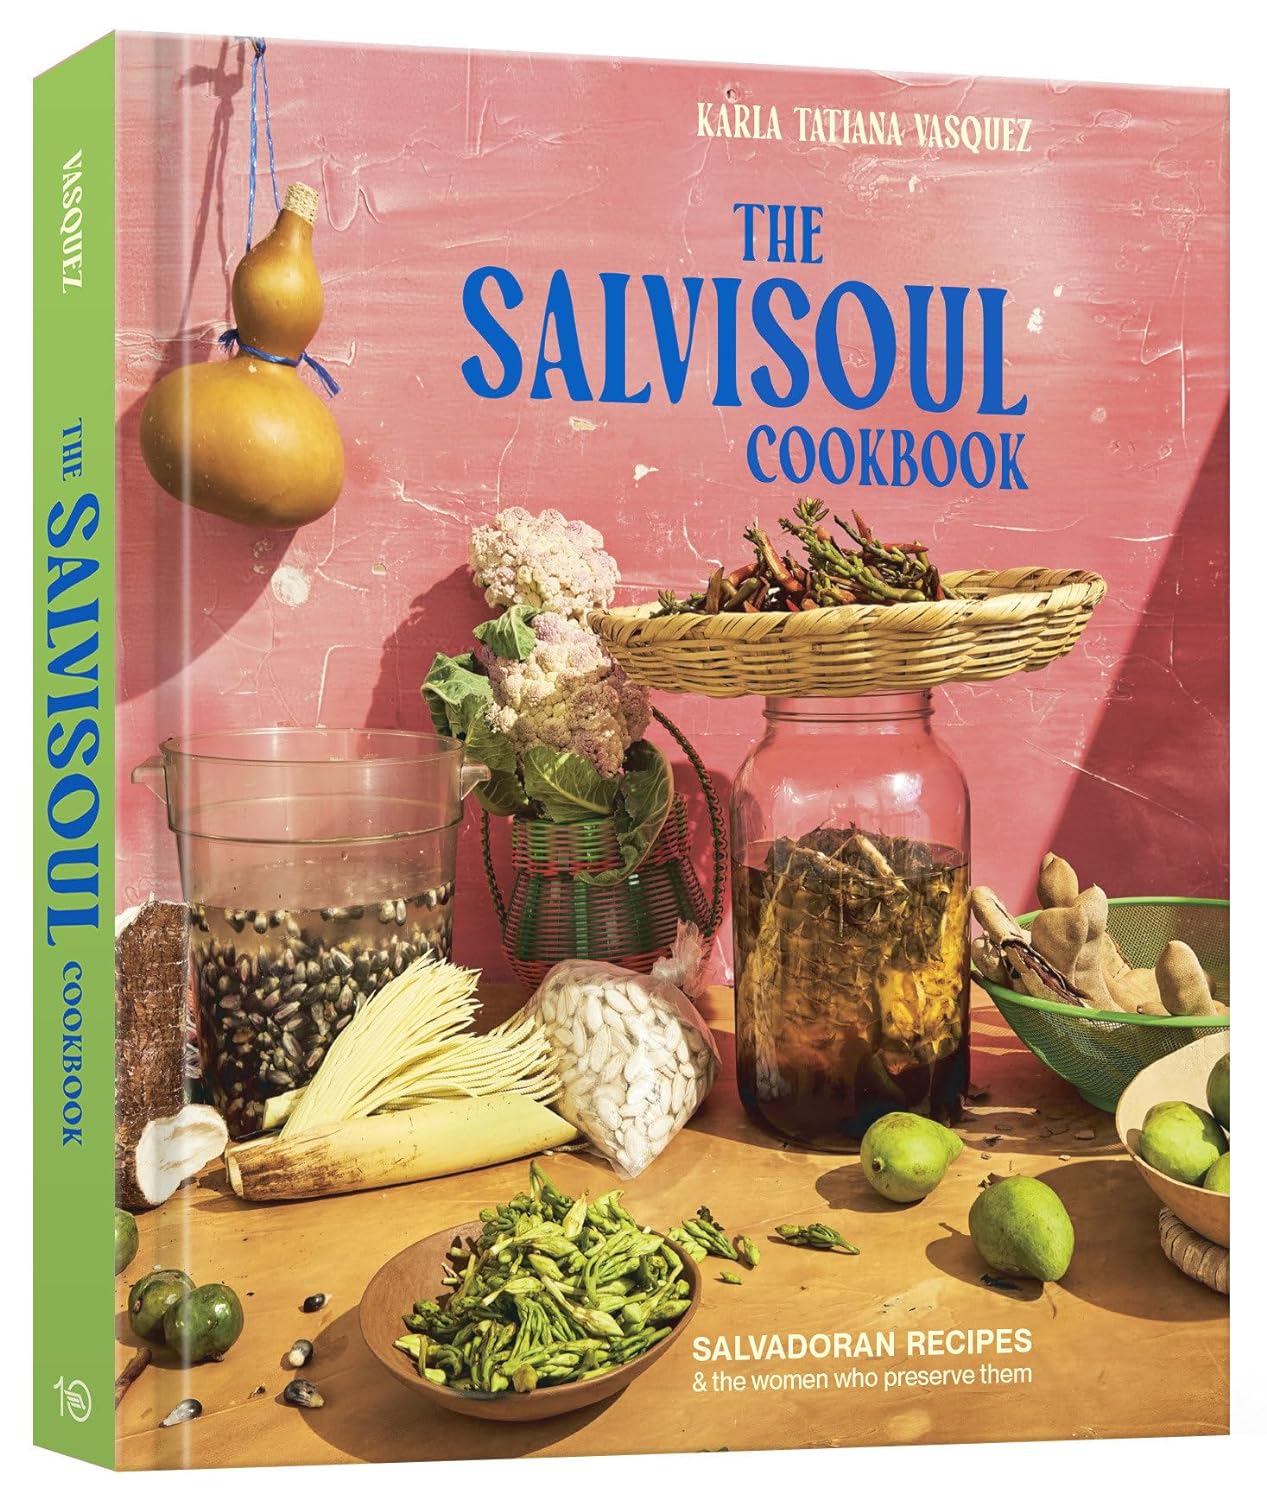 The SalviSoul Cookbook: Salvadoran Recipes and the Women Who Preserve Them (Karla Tatiana Vasquez)